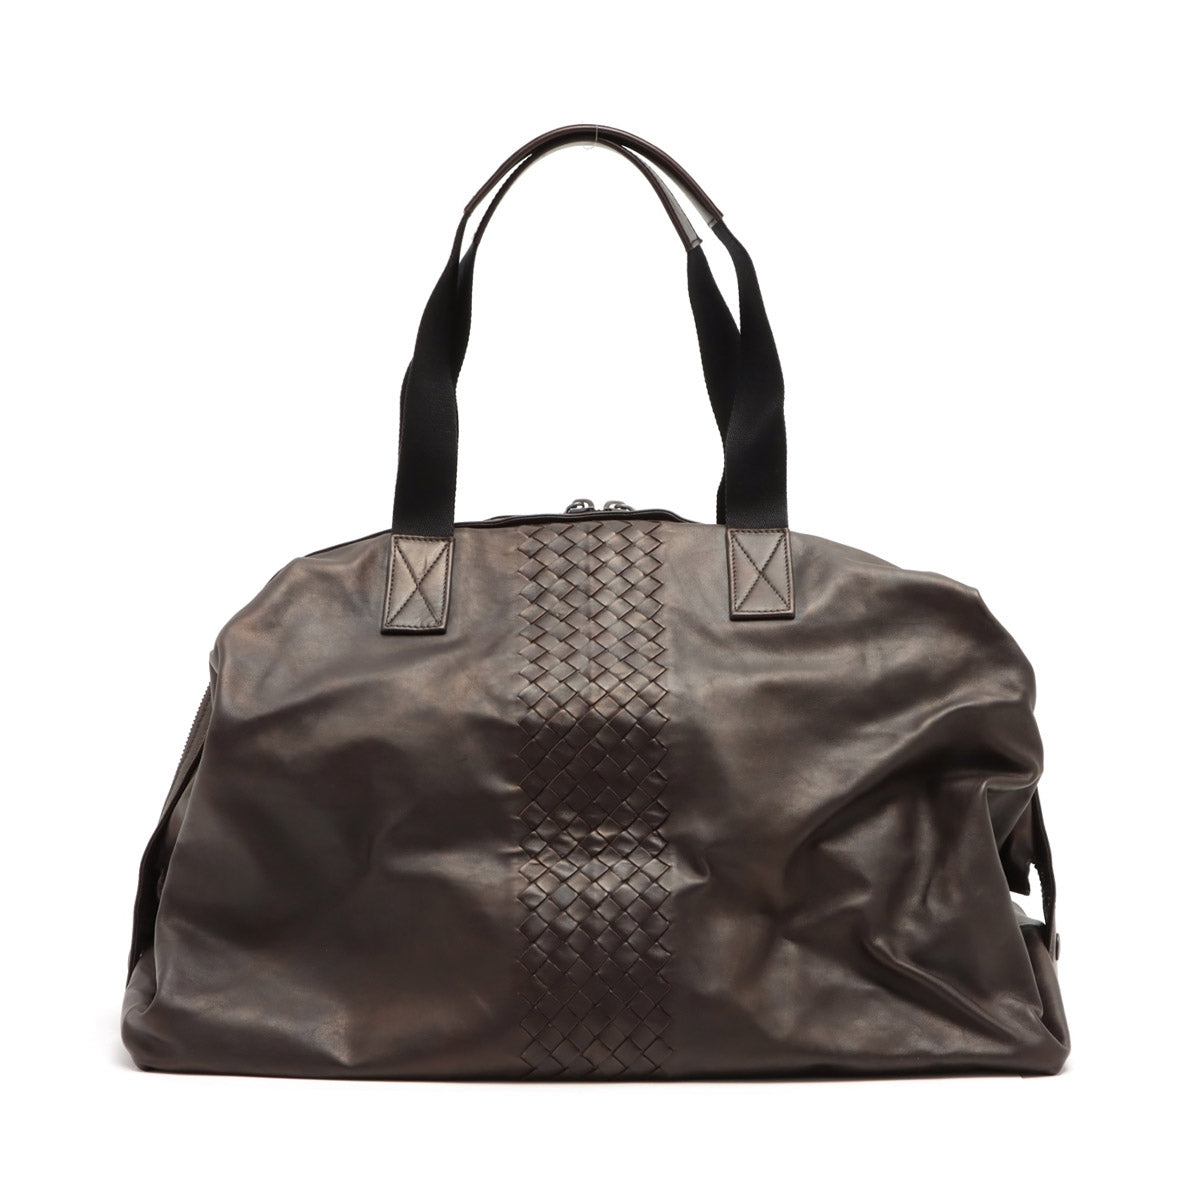 Bottega Veneta Intrecciato Leather Boston bag bronze 234521